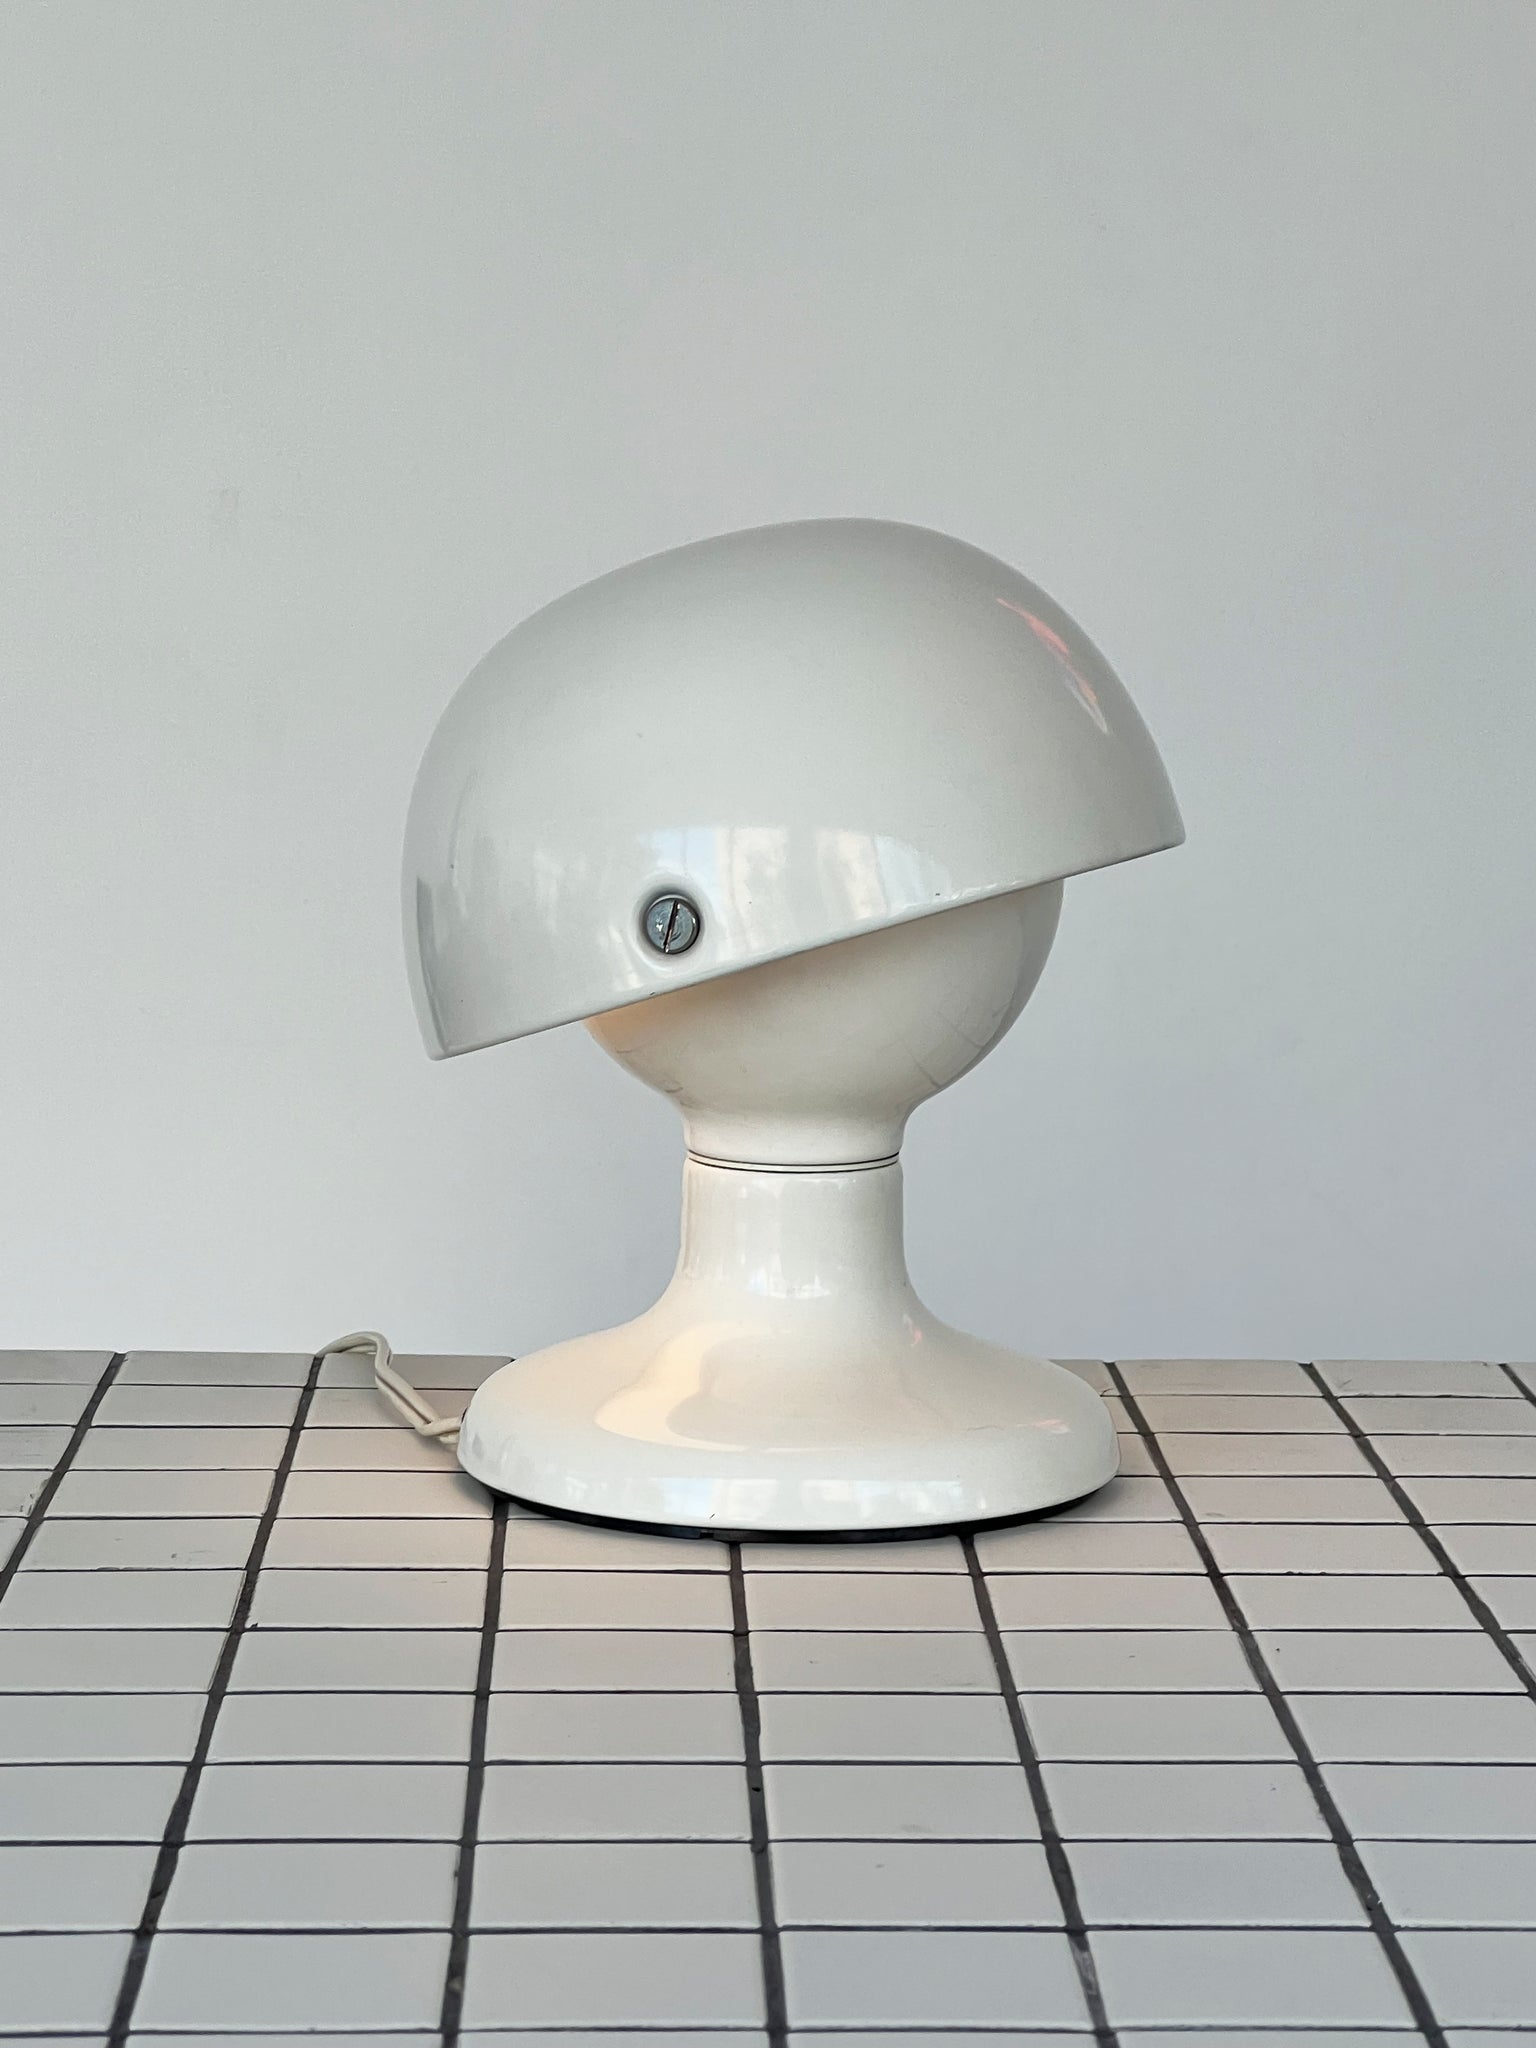 1963 White Enameled Jucker Lamp by Tobia Scarpa